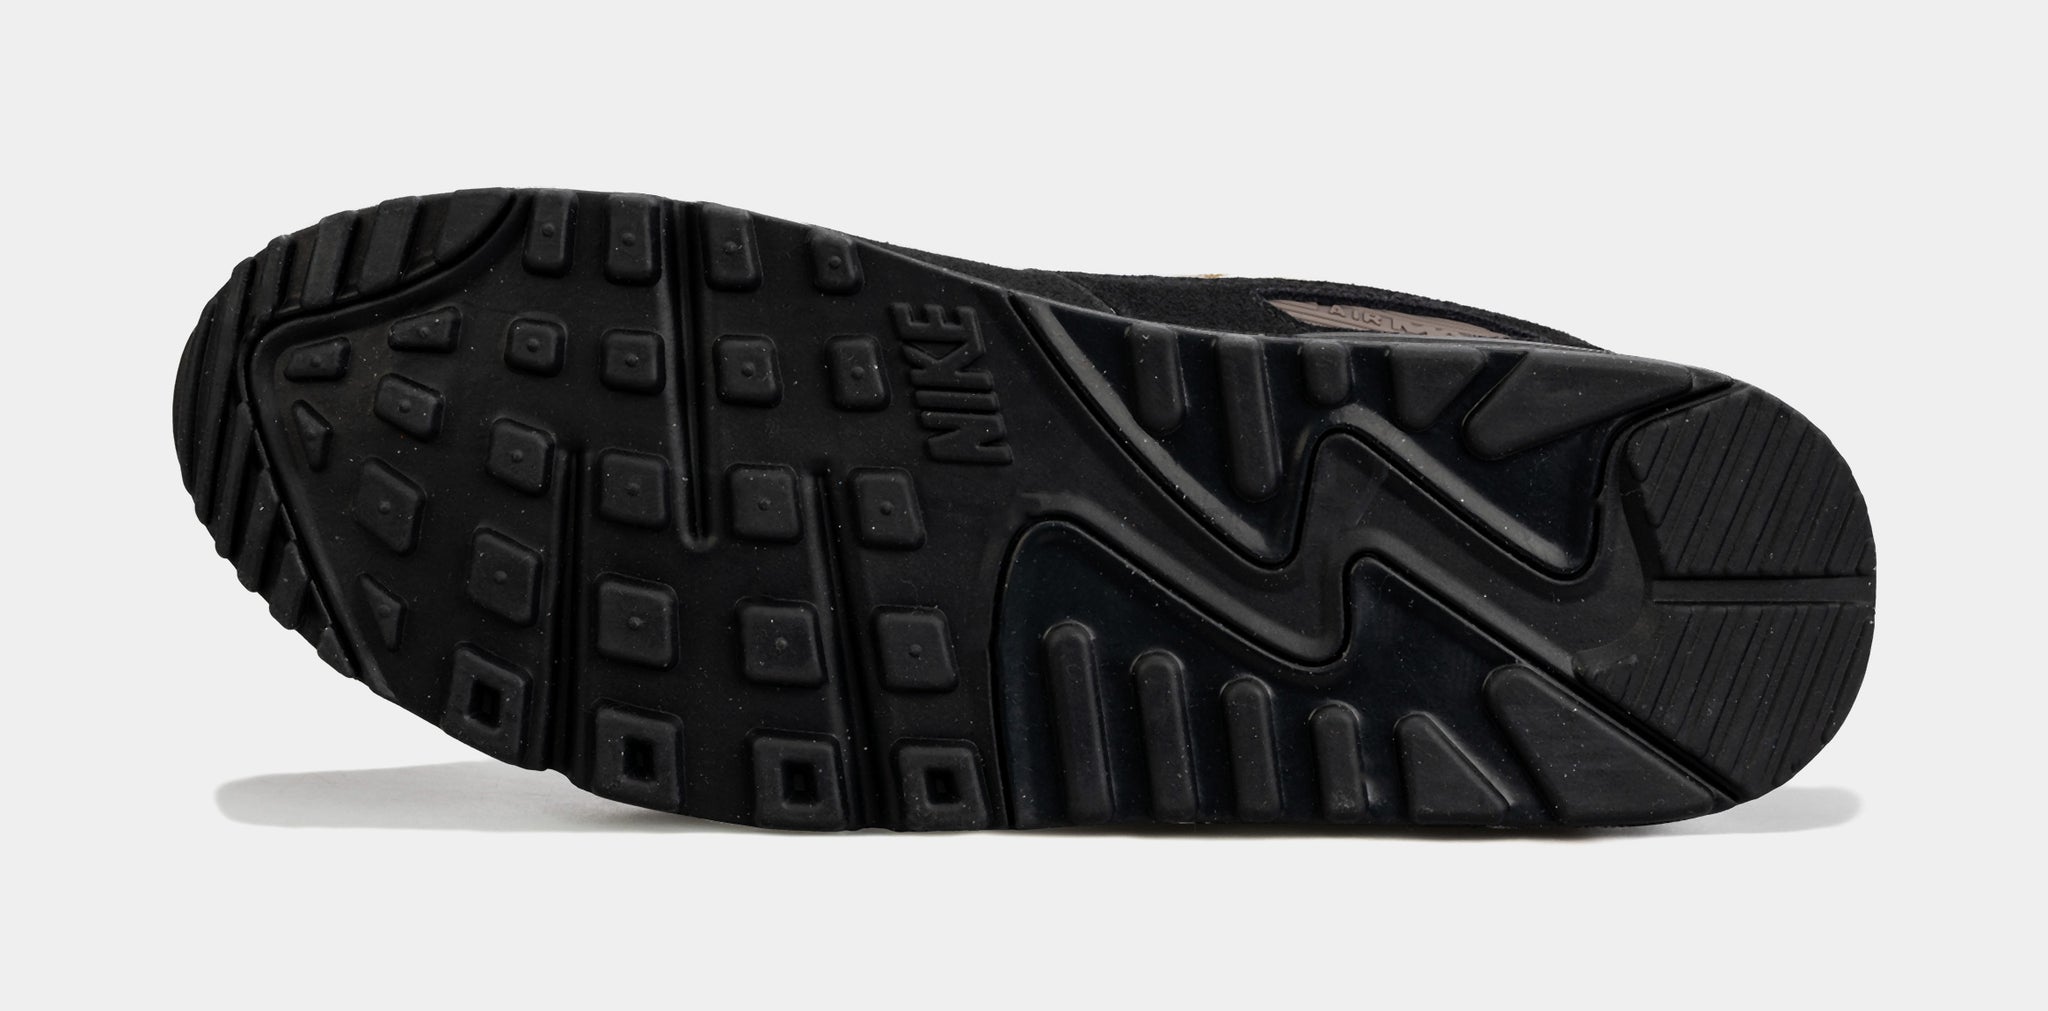 Nike Air Max 90 Mens Lifestyle Shoes Brown Black DZ3522-001 – Shoe